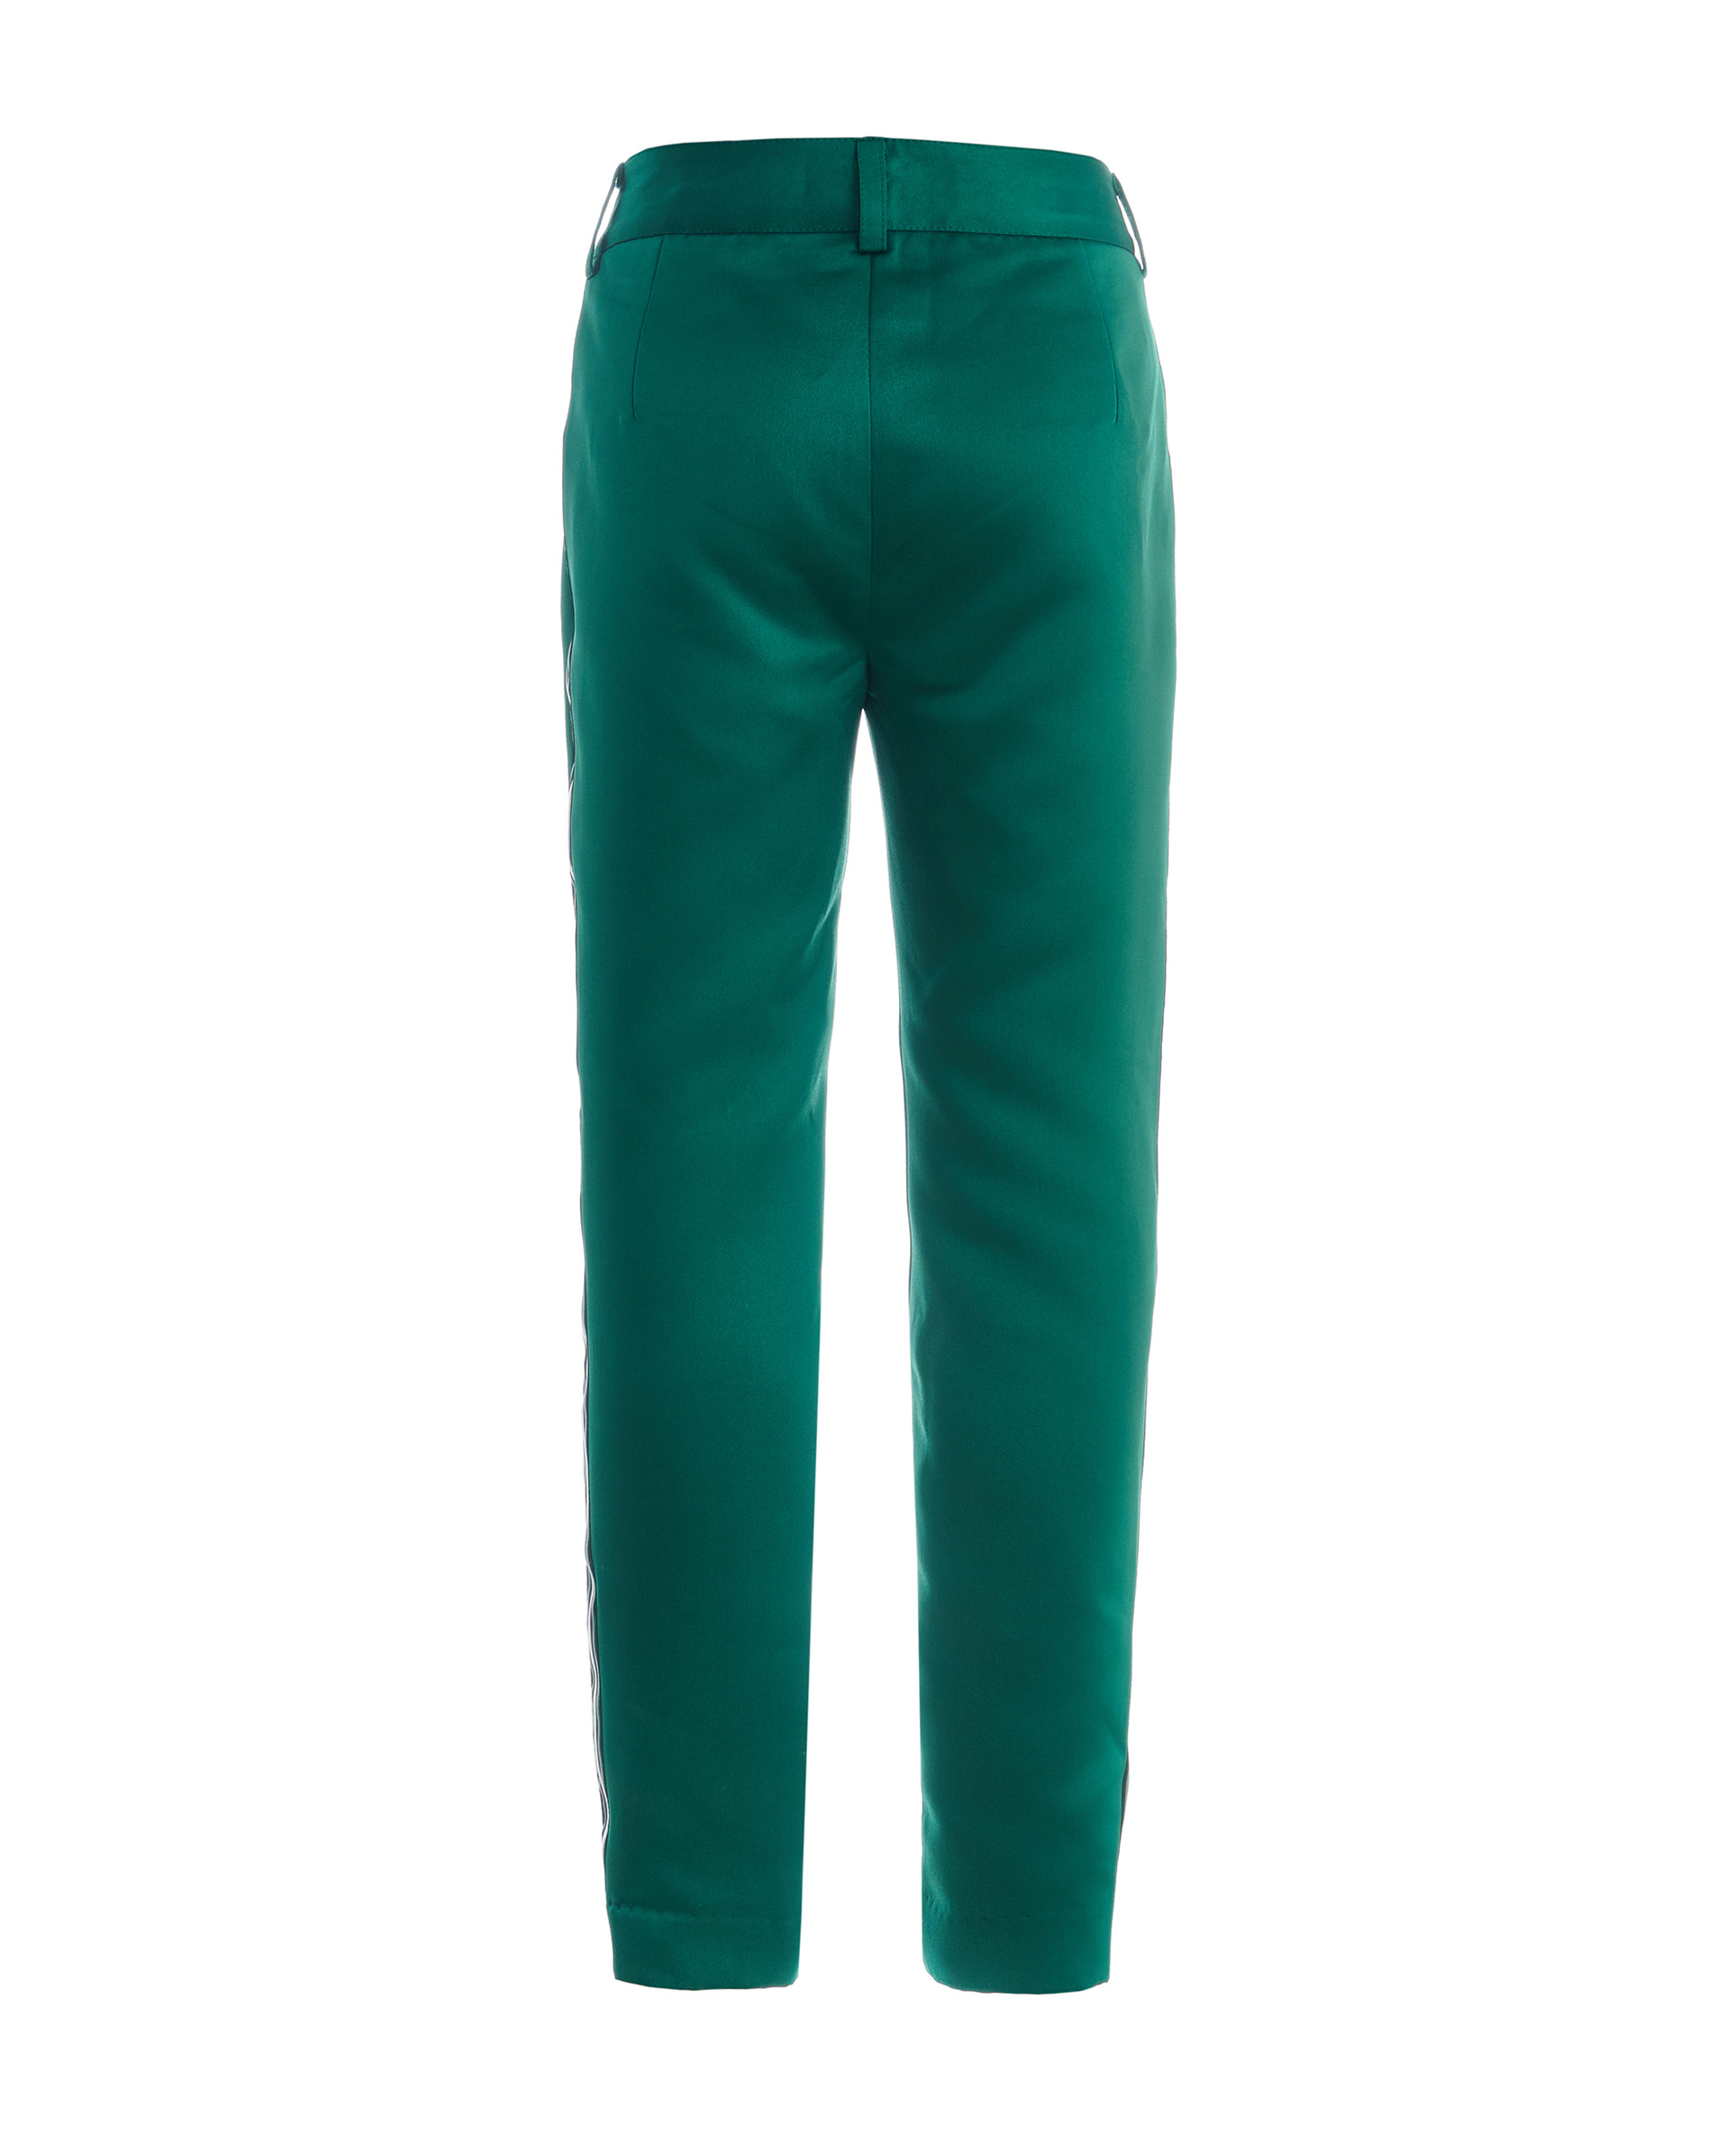 Зеленые брюки с лампасами Gulliver 219GPGJC6301, размер 158, цвет зеленый - фото 3